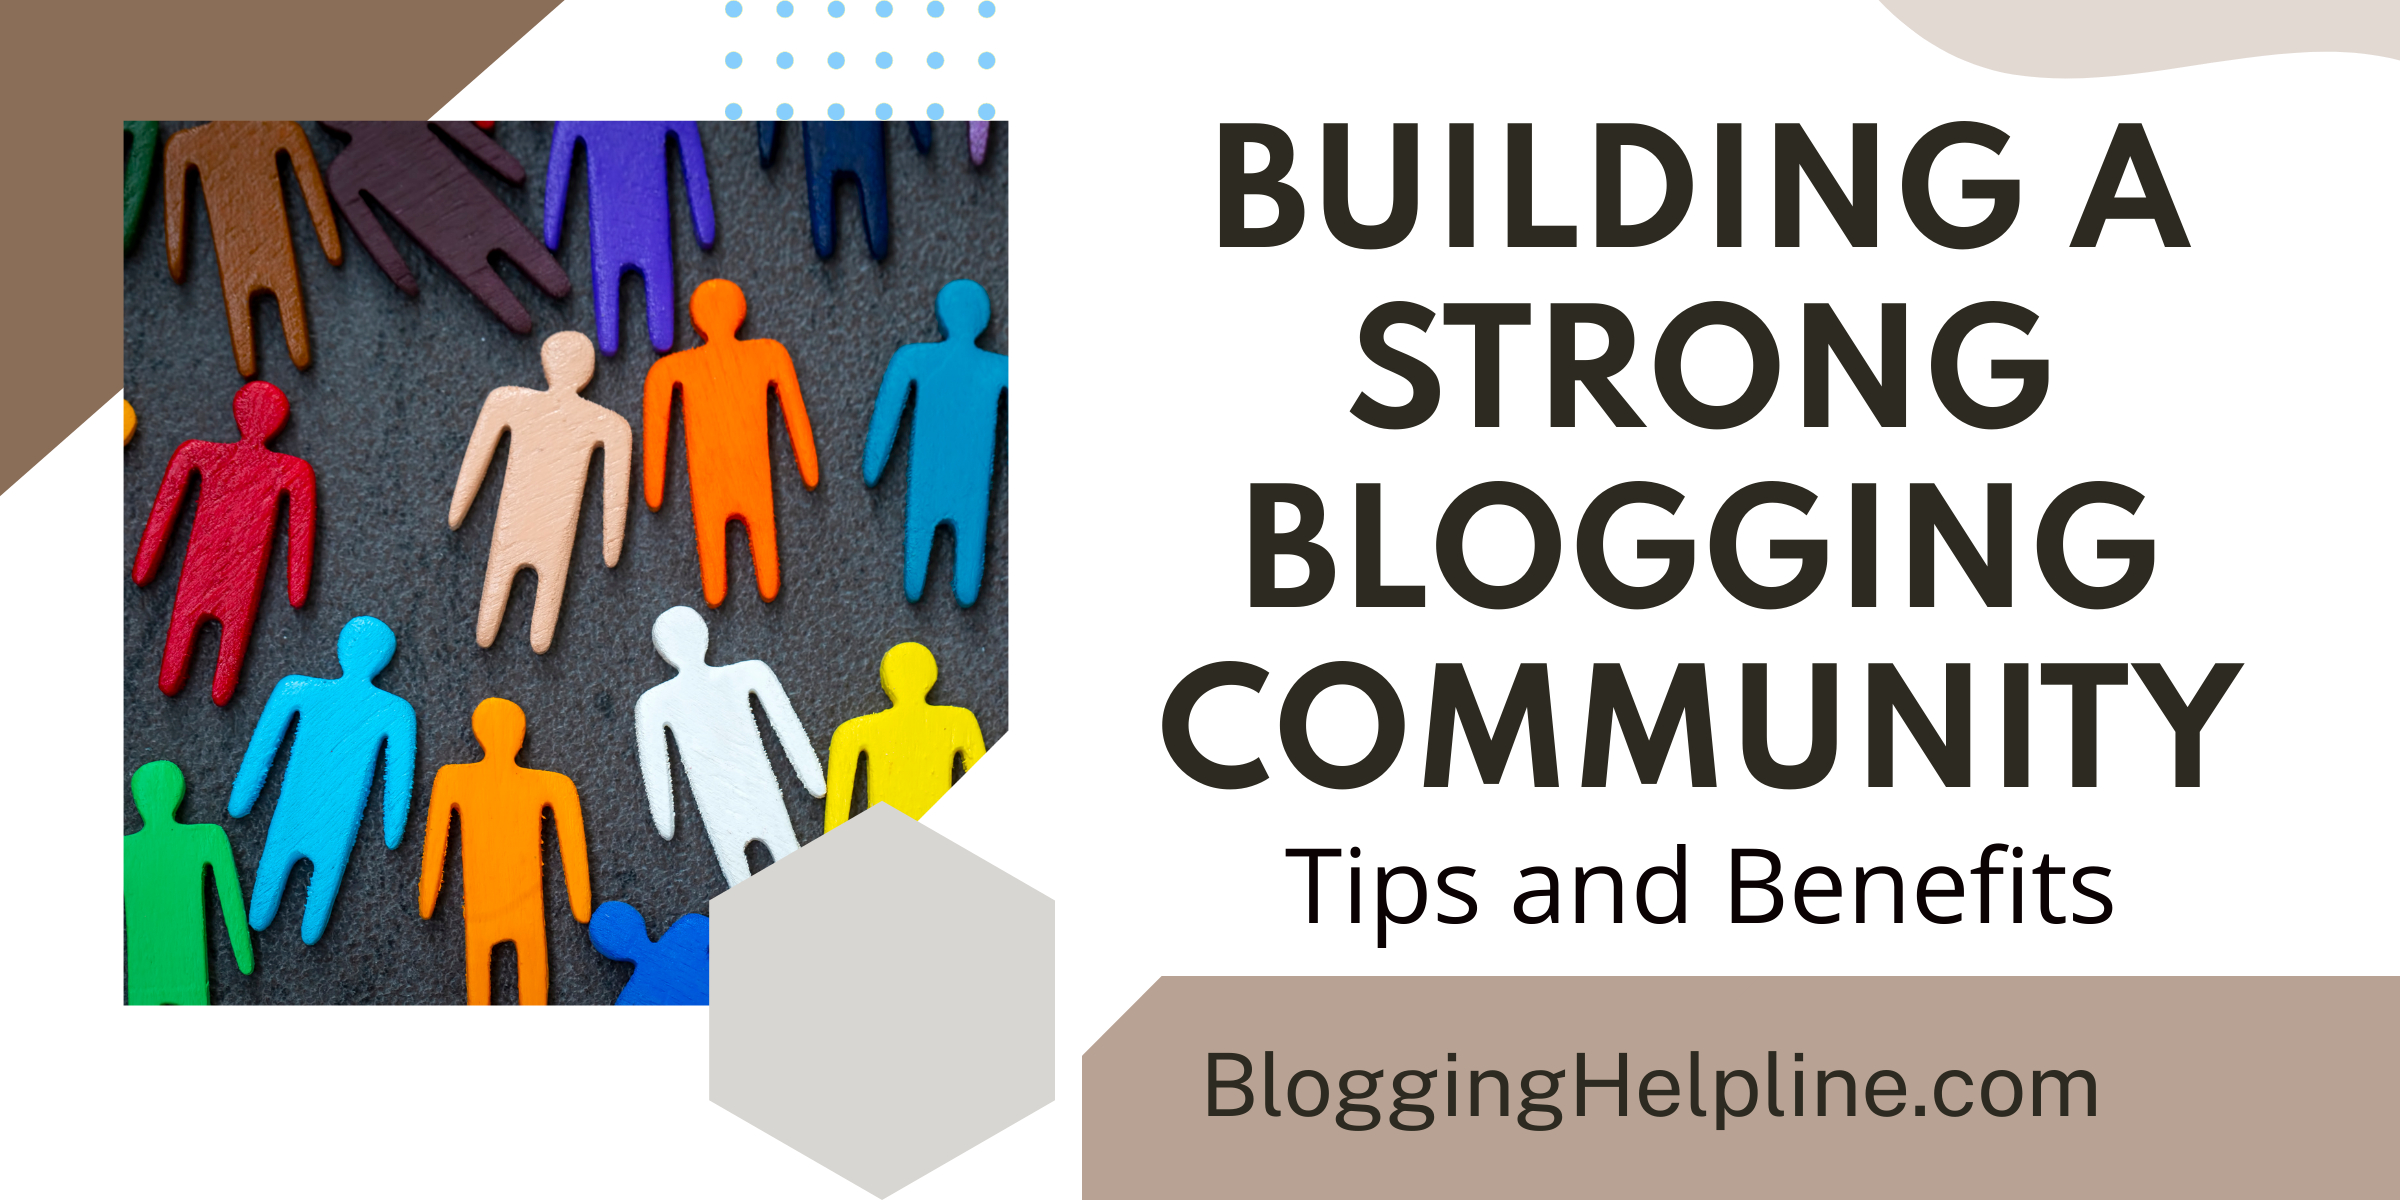 Blogging Community